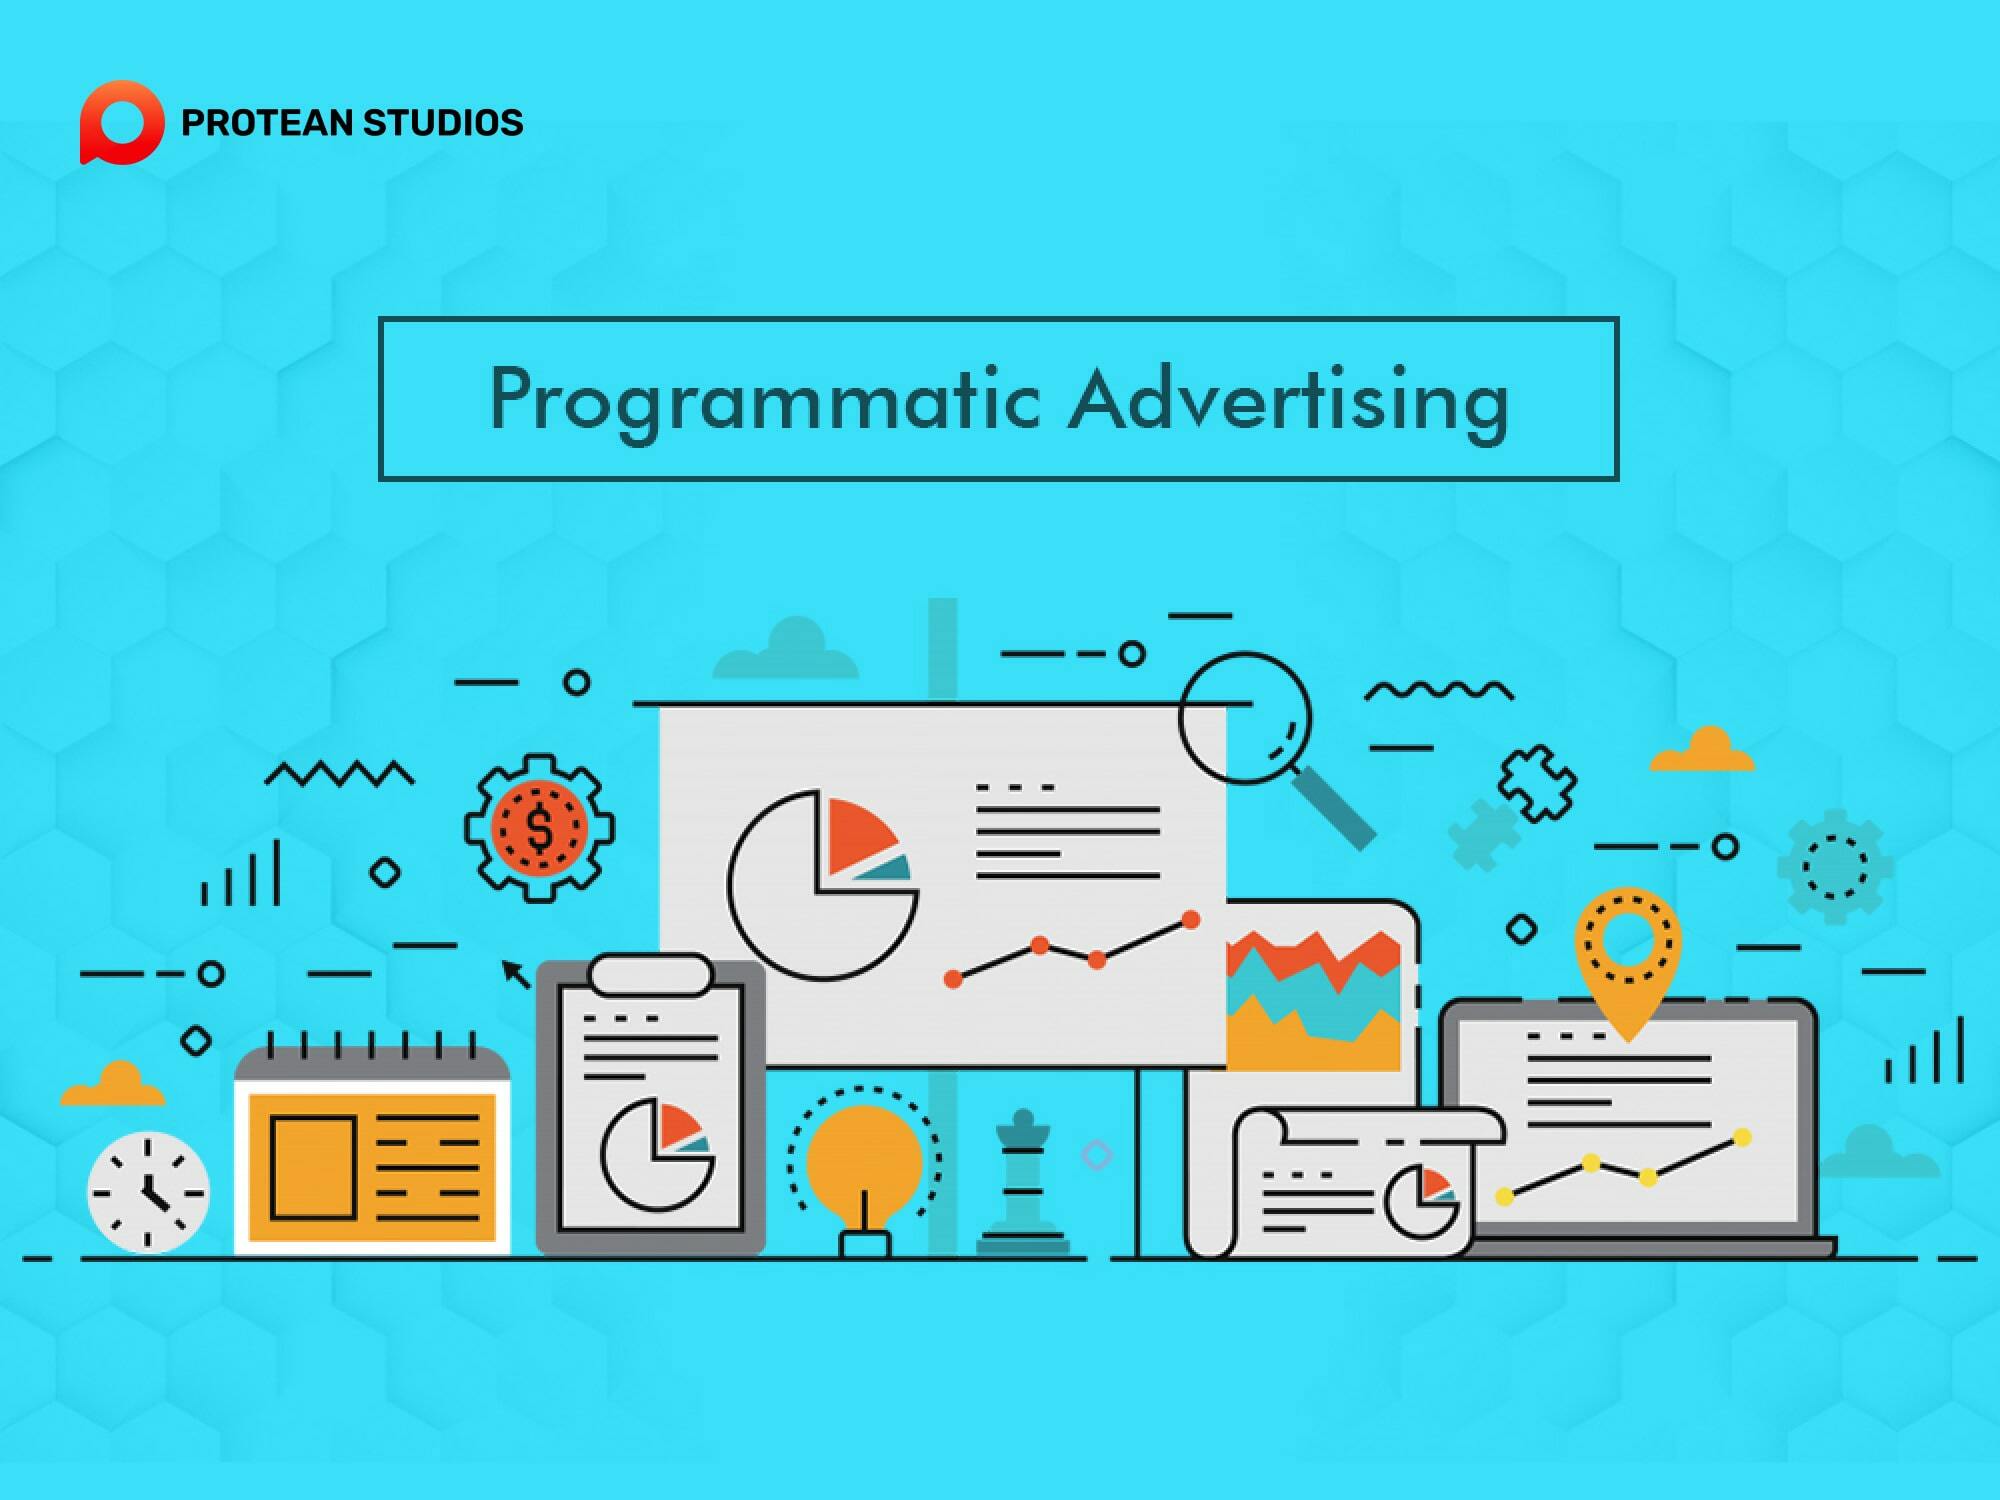 The main programmatic advertising